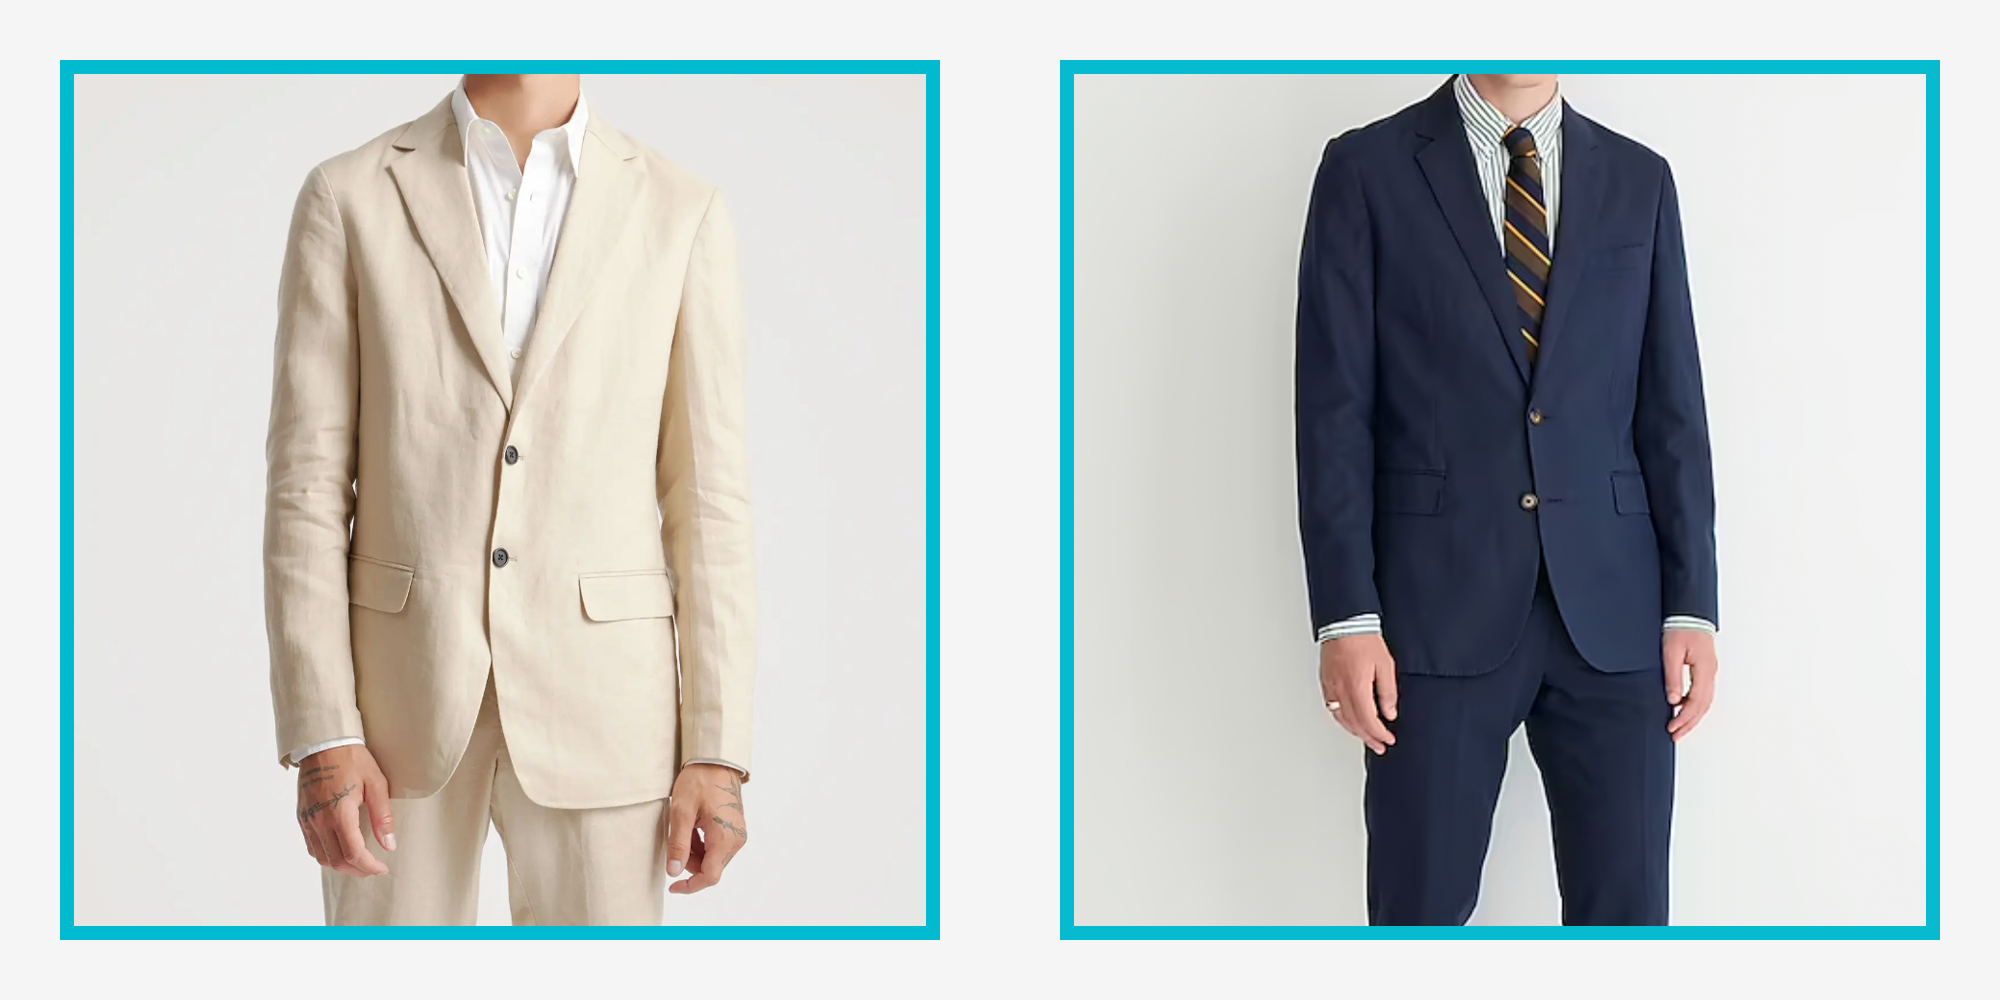 Buy AK Beauty Khaki Men Suits Wedding Groom Suit Formal Business Suit ( Jacket+Pants) 44/38 at Amazon.in